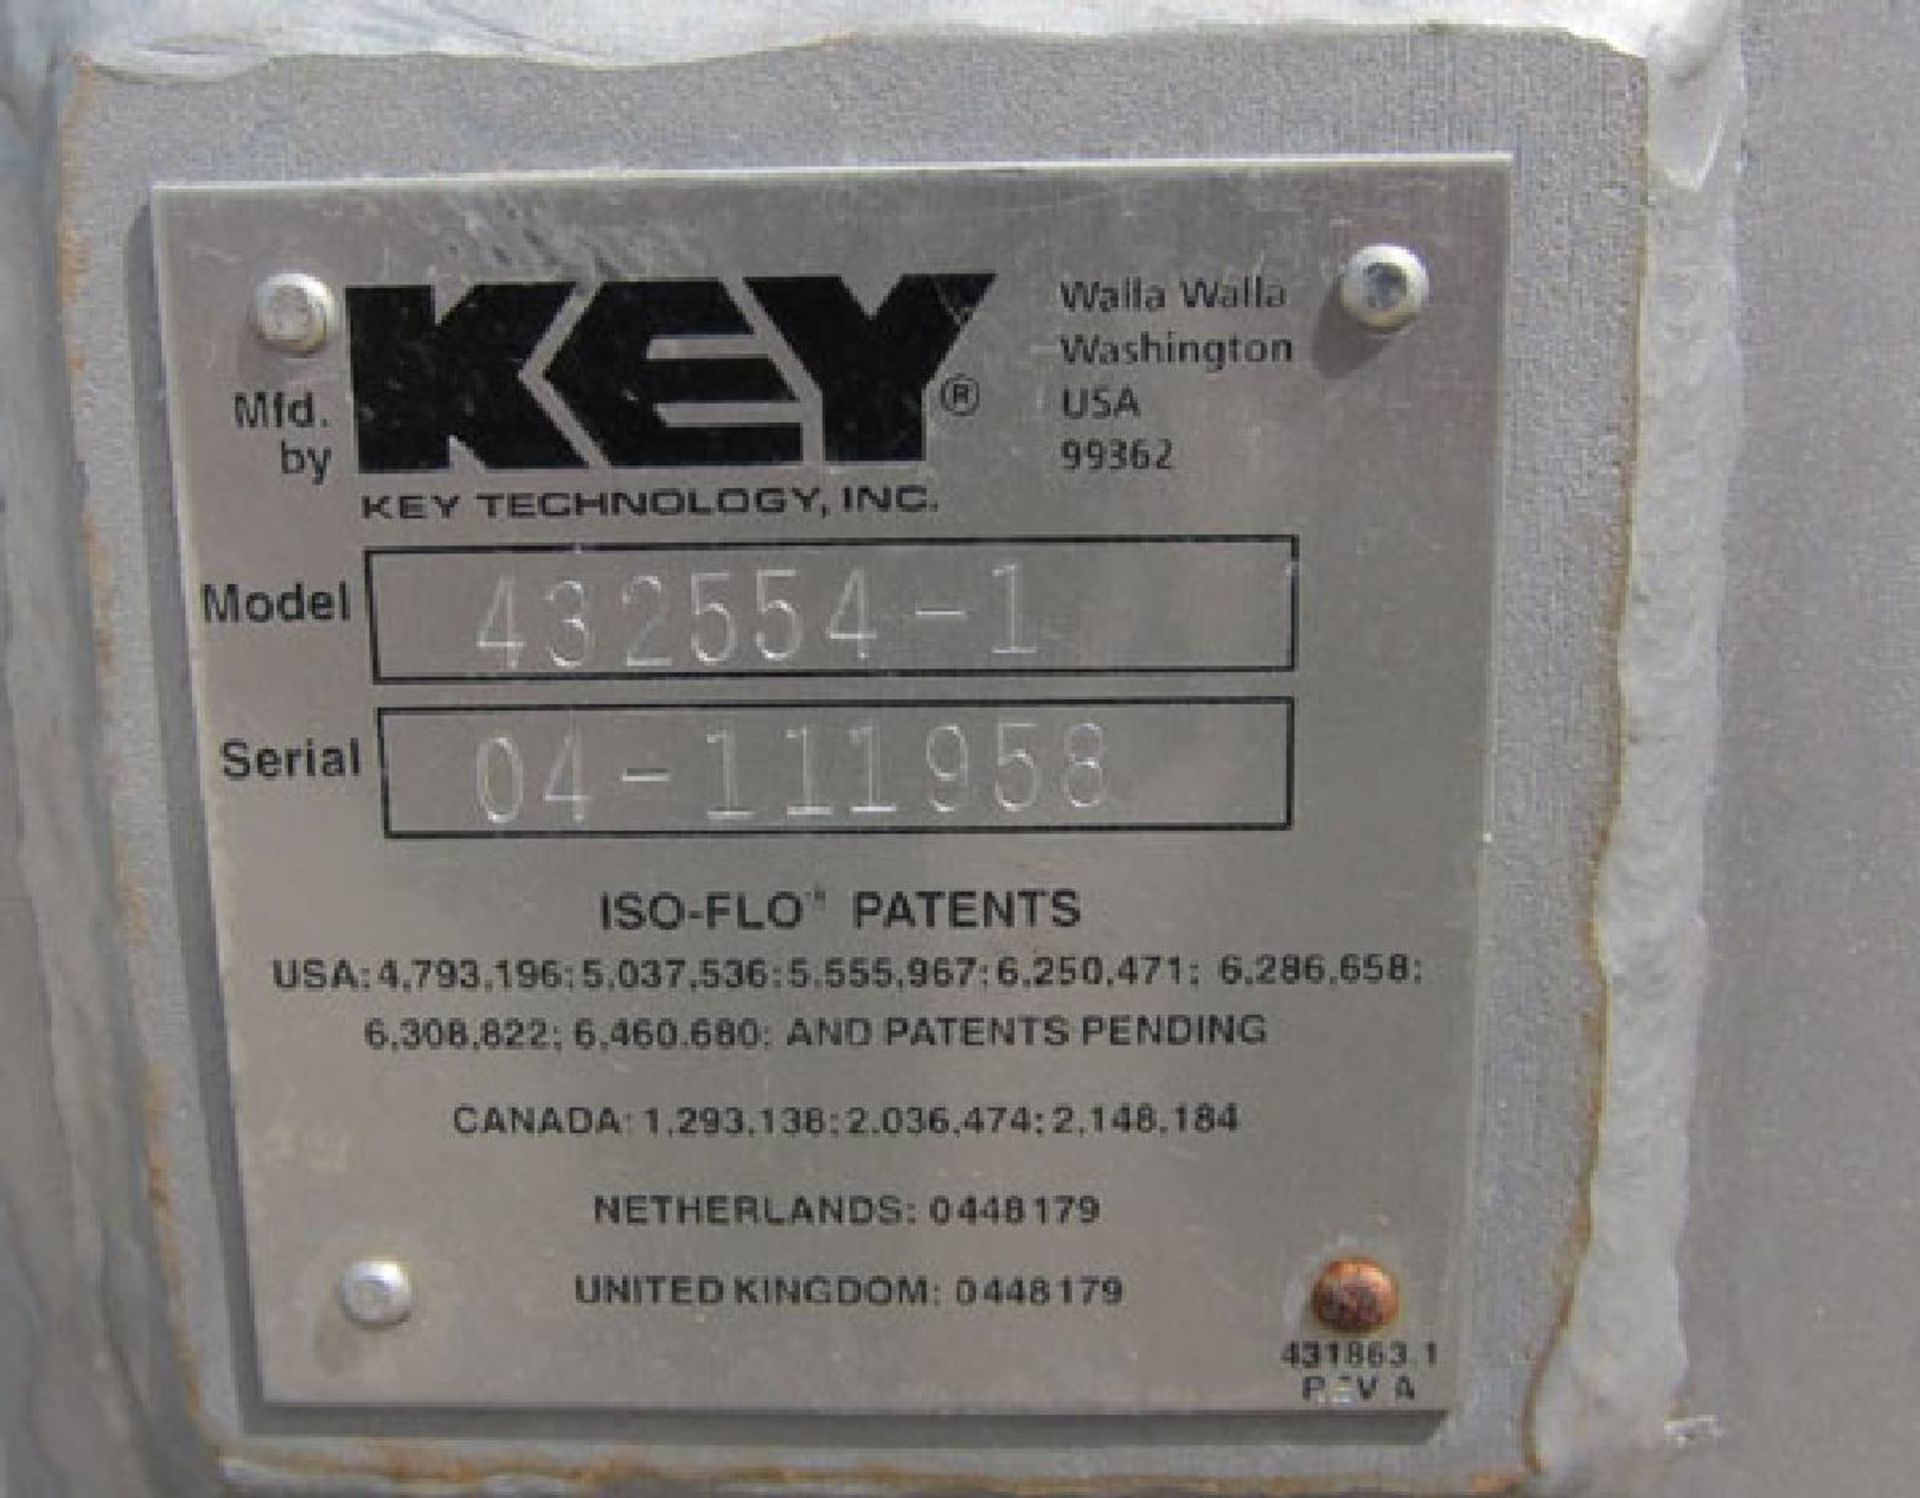 Key Technology Model 432554-1 5 Lane ISO-FLO Vibratory Conveyor - Image 12 of 13